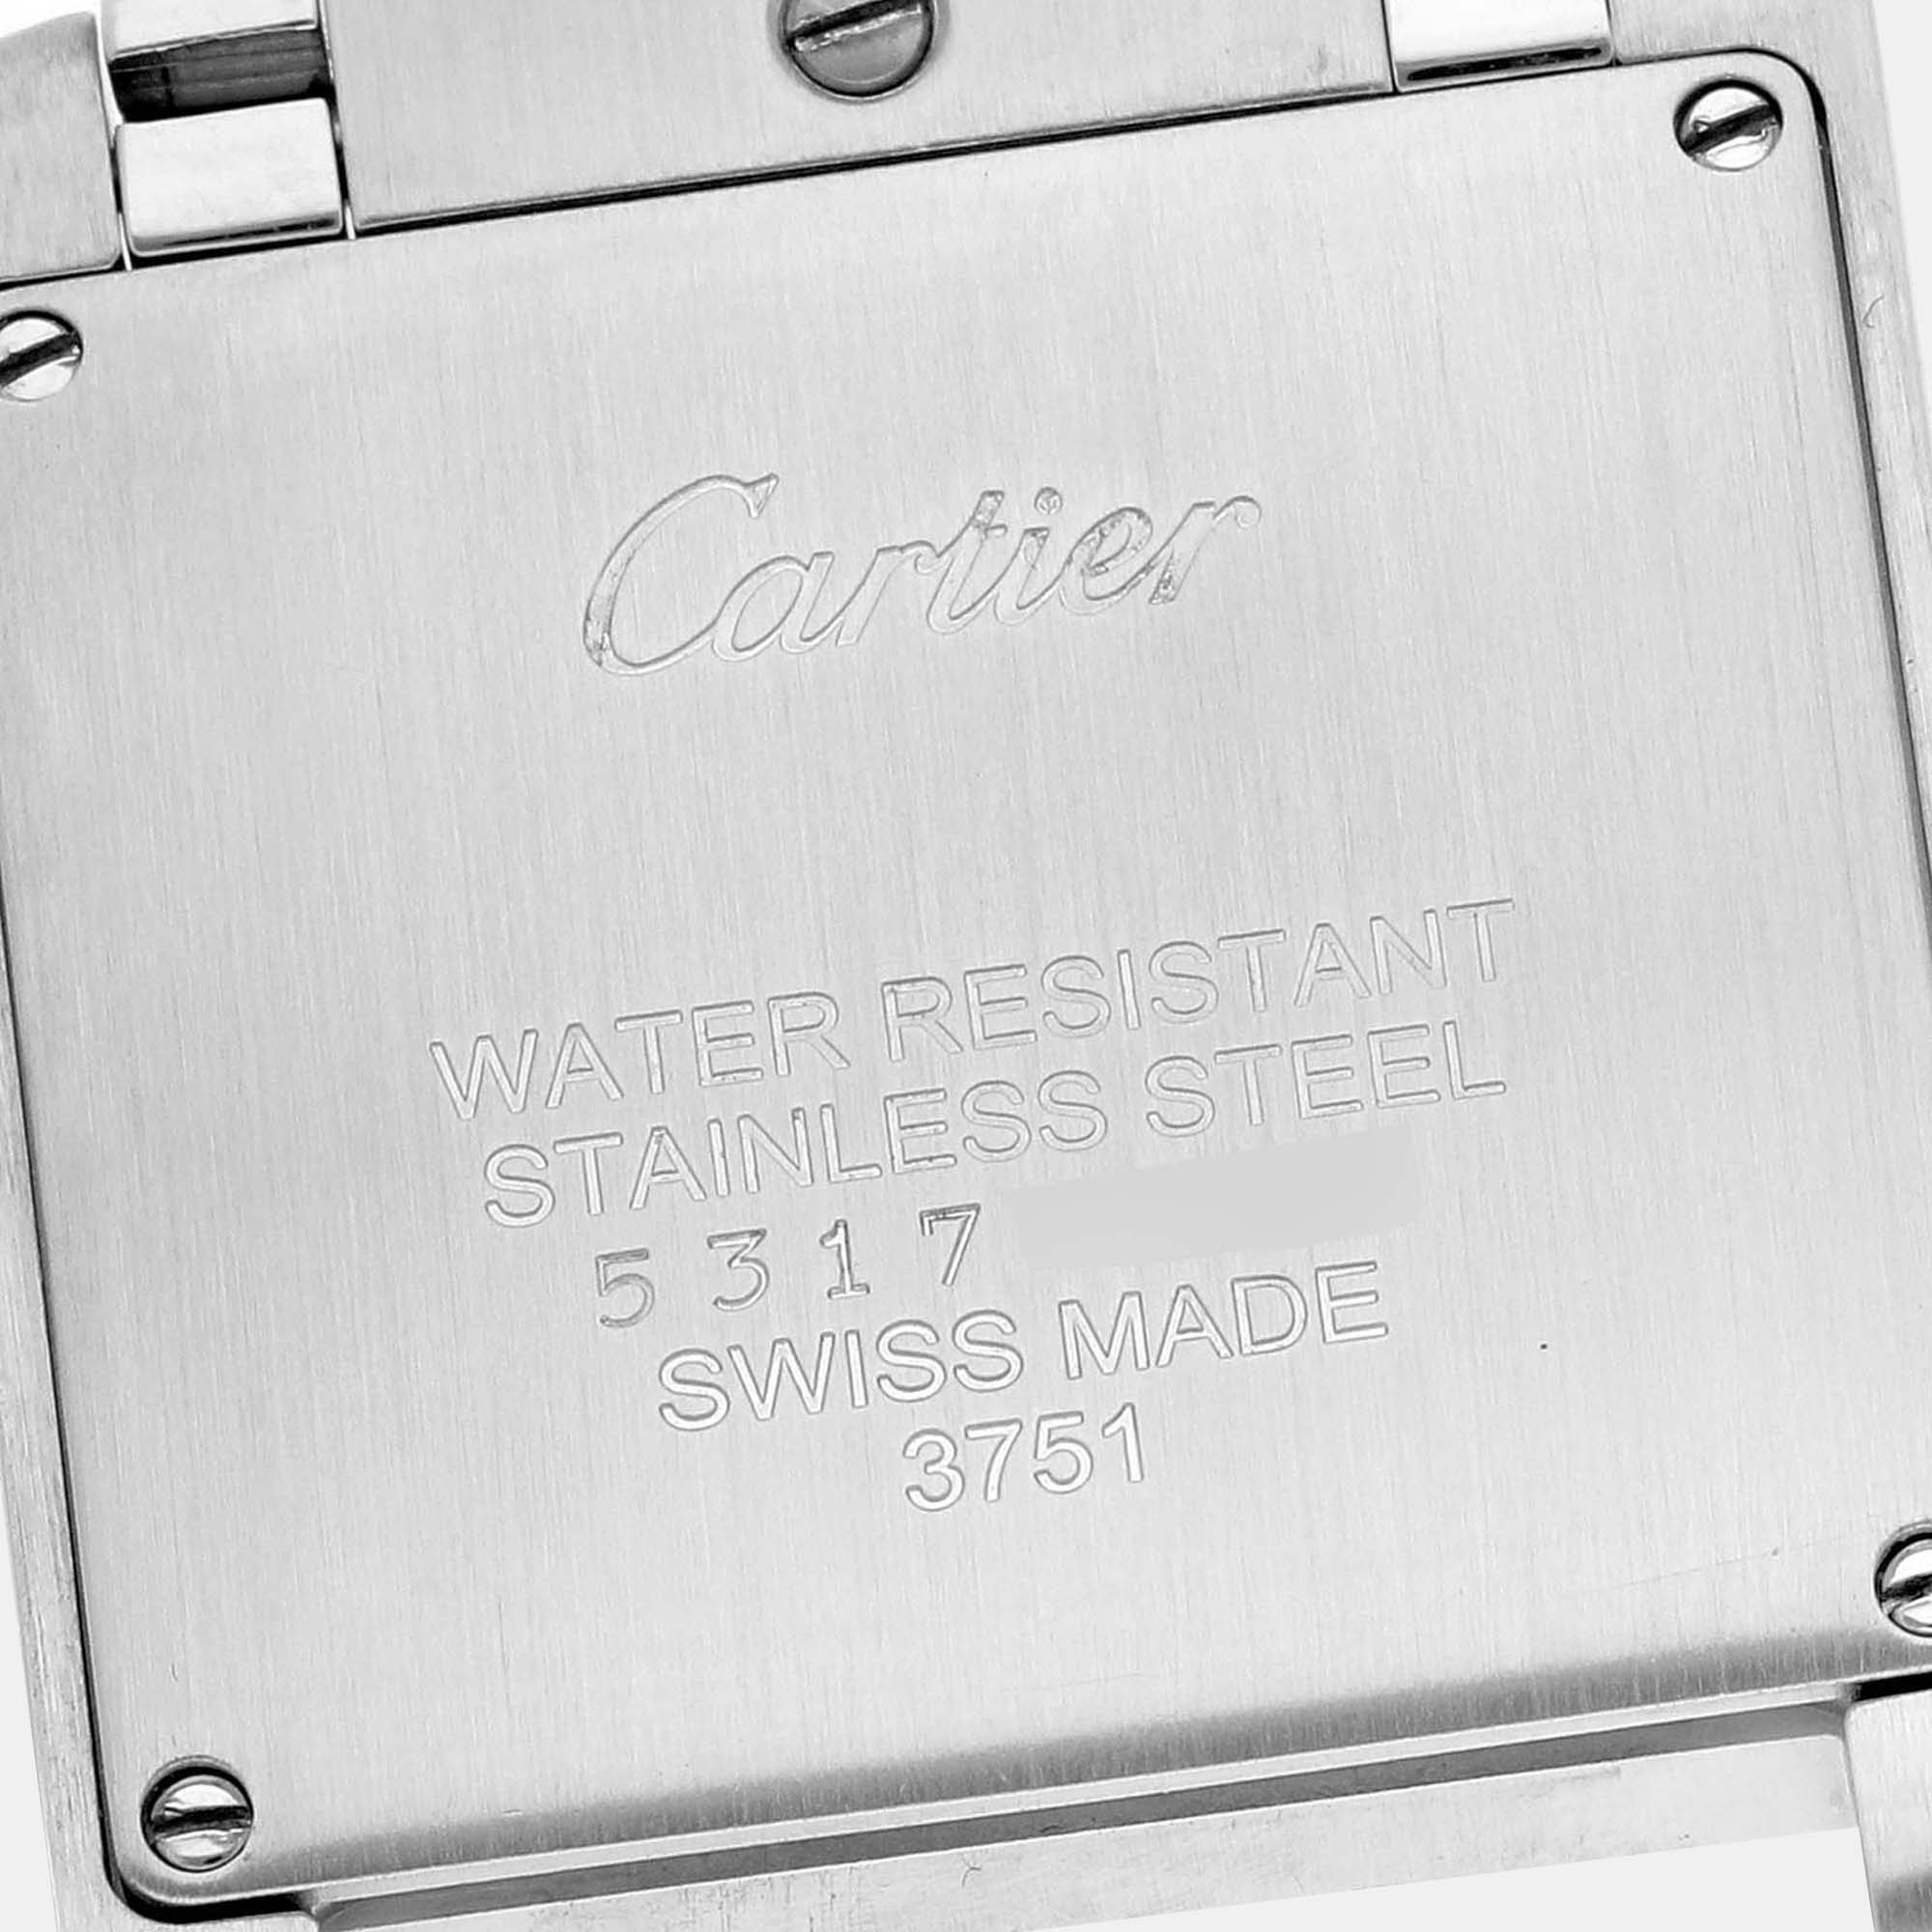 Cartier Tank Francaise Midsize Diamond Steel Rose Gold Ladies Watch WE110005 25 X 30 Mm